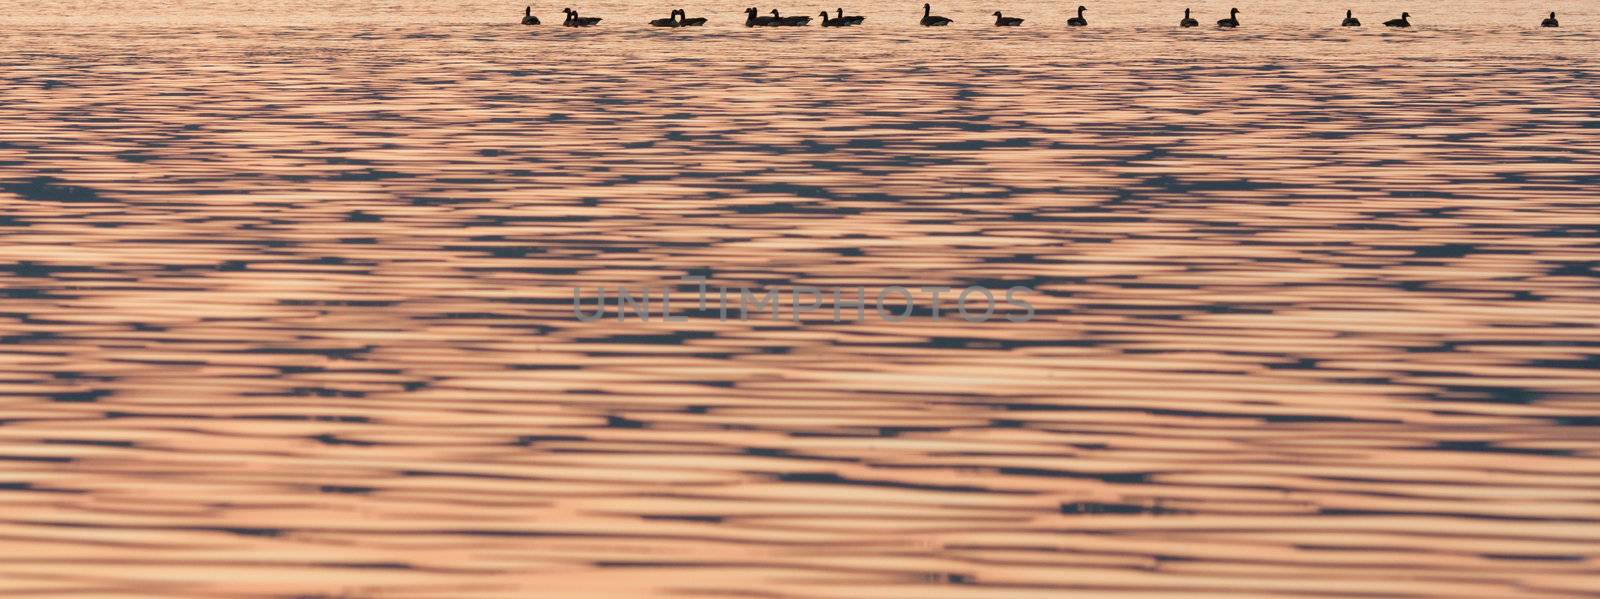 Sunset Ducks by toliknik